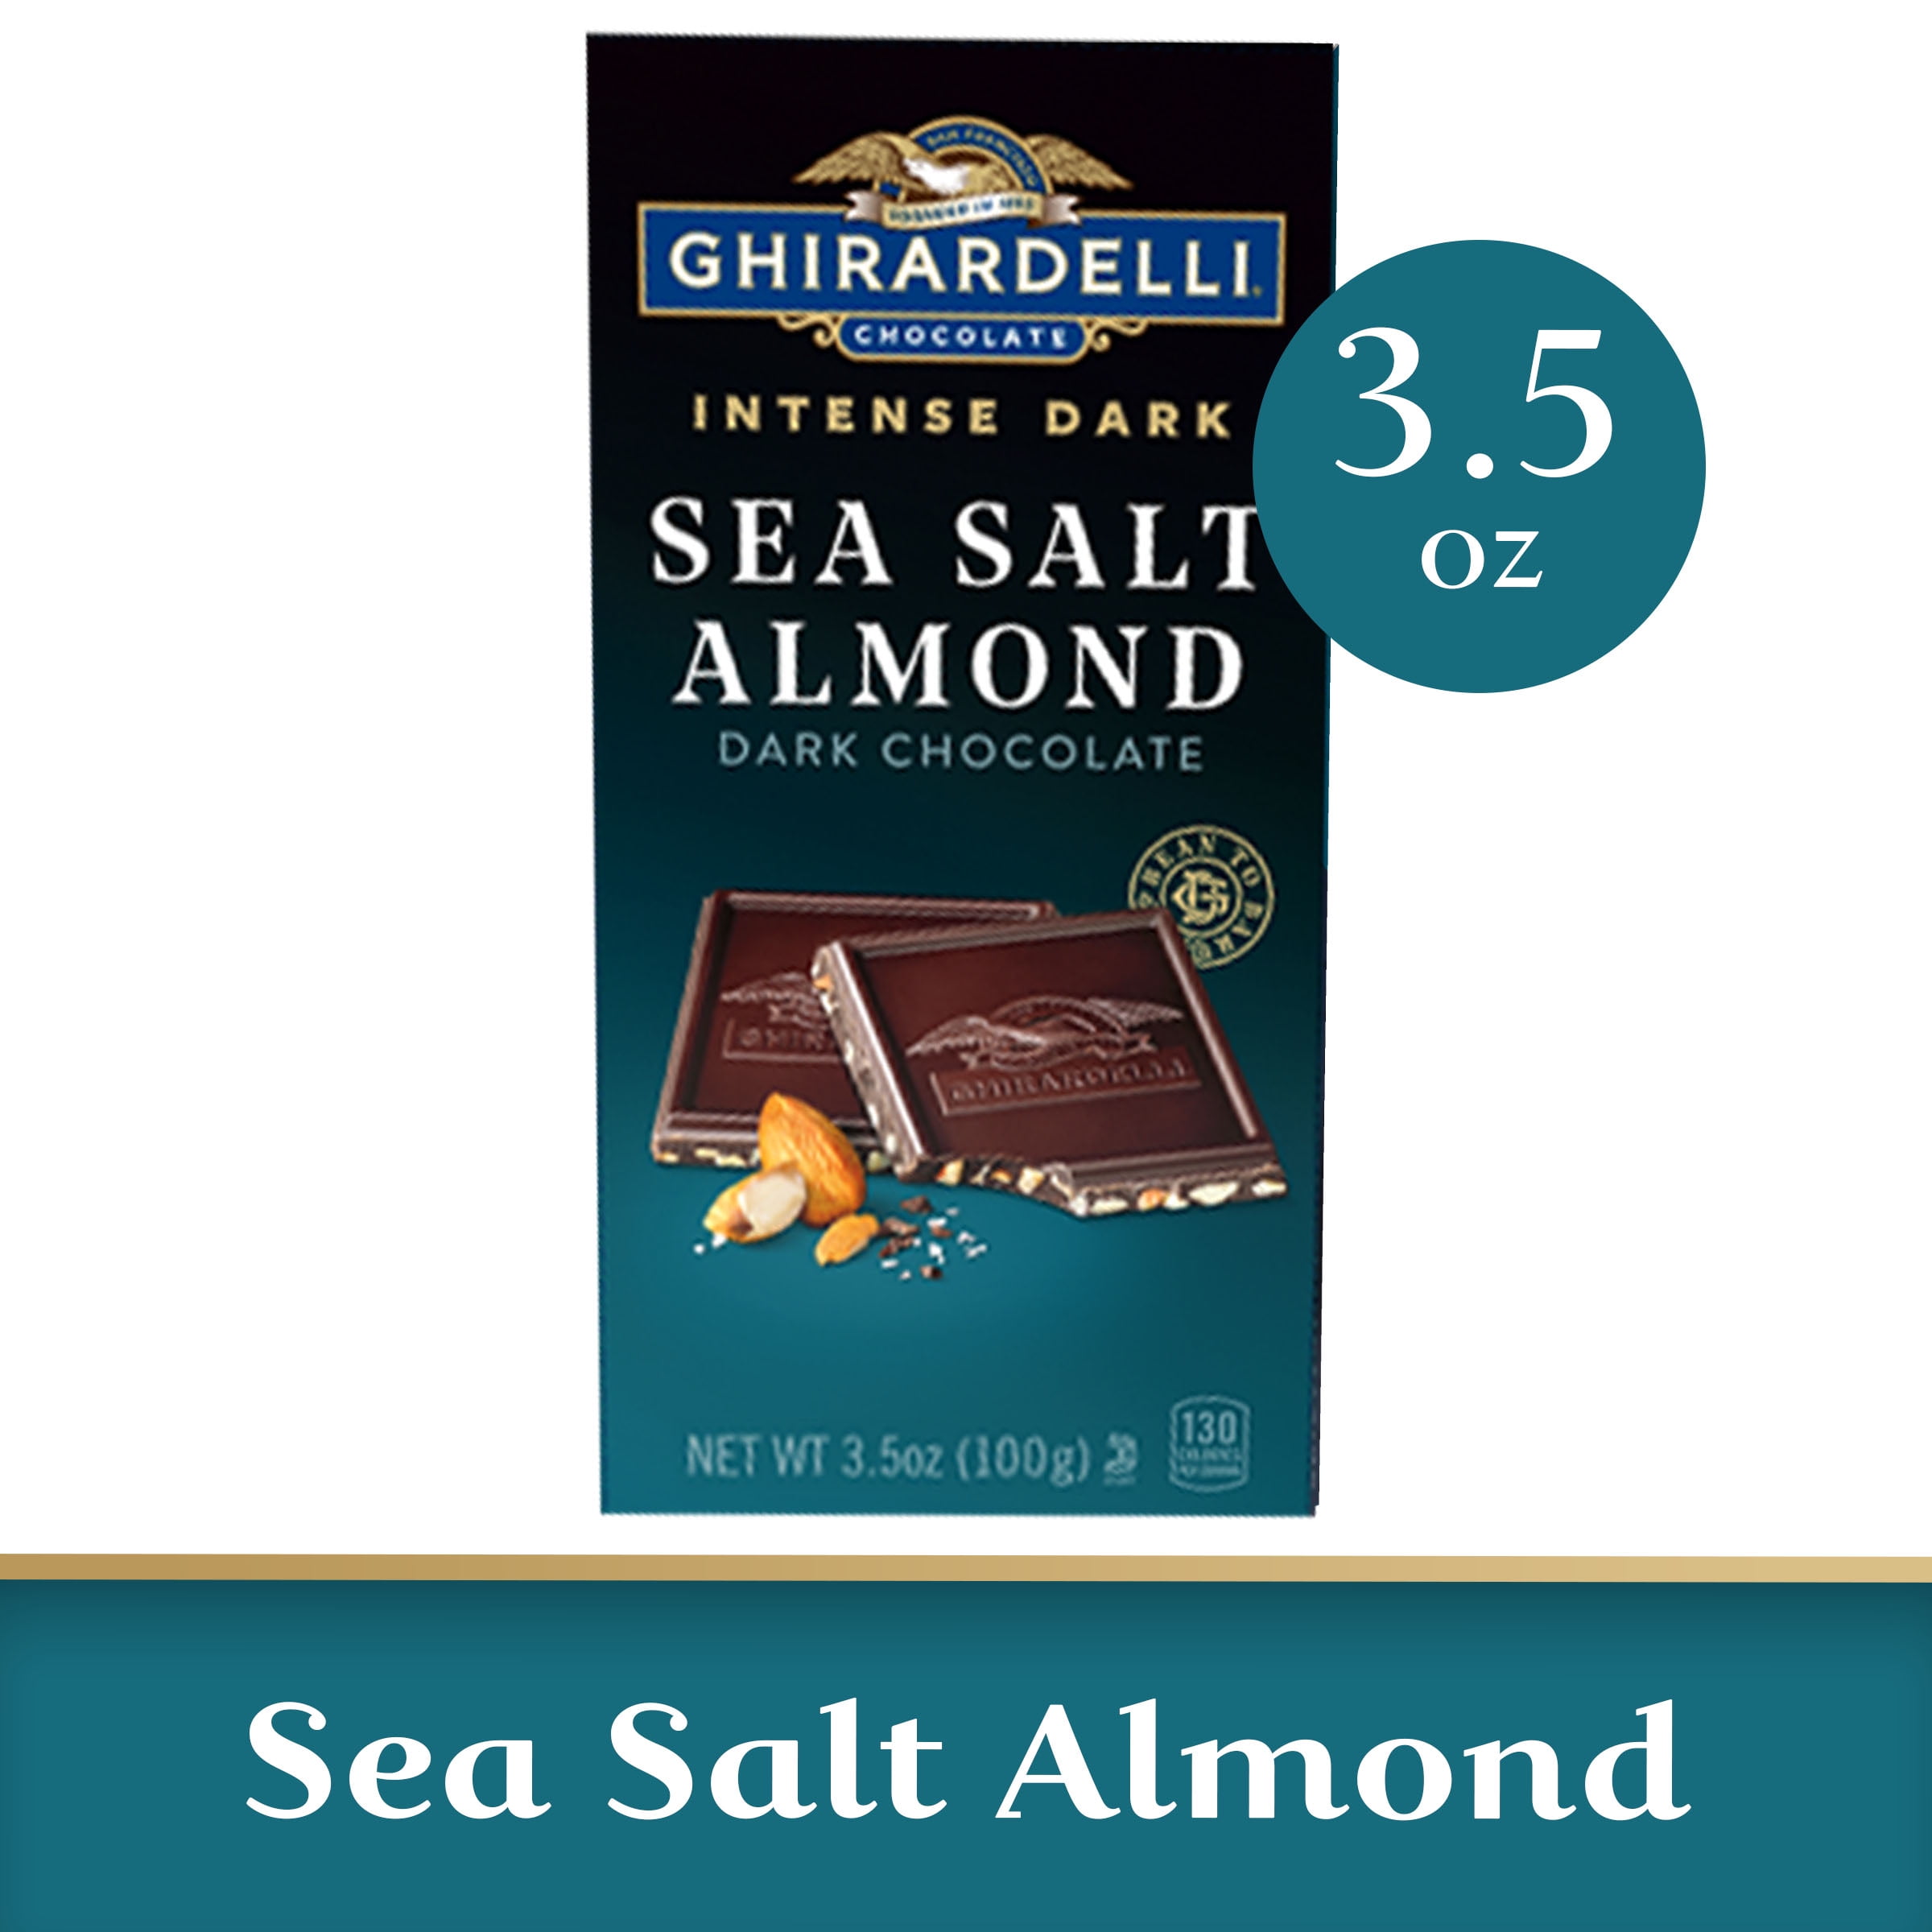 GHIRARDELLI Intense Dark Chocolate Bar, Sea Salt Almond, 3.5 Oz Bar